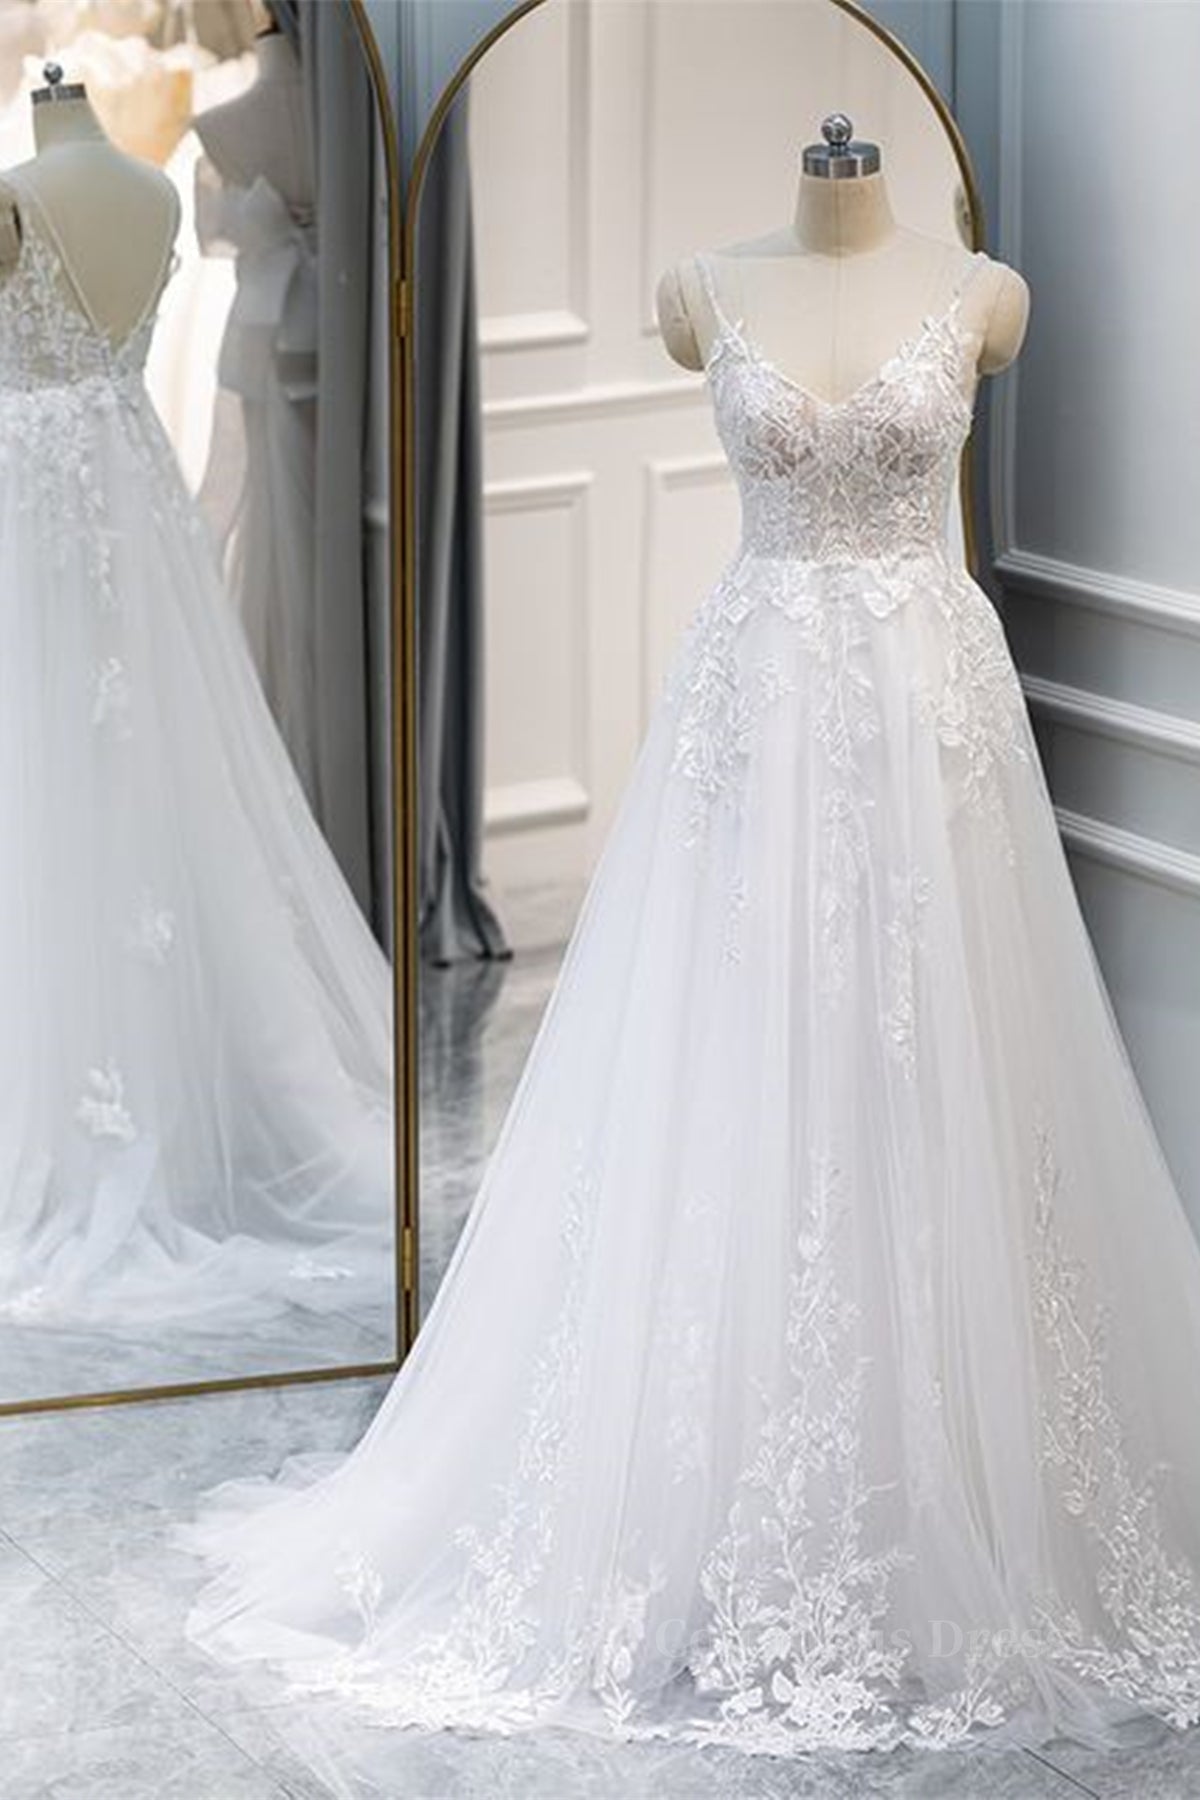 A Line V Neck White Lace Long Corset Prom Dress, White Lace Corset Wedding Dress, White Corset Formal Evening Dress outfit, Wedding Dress Style